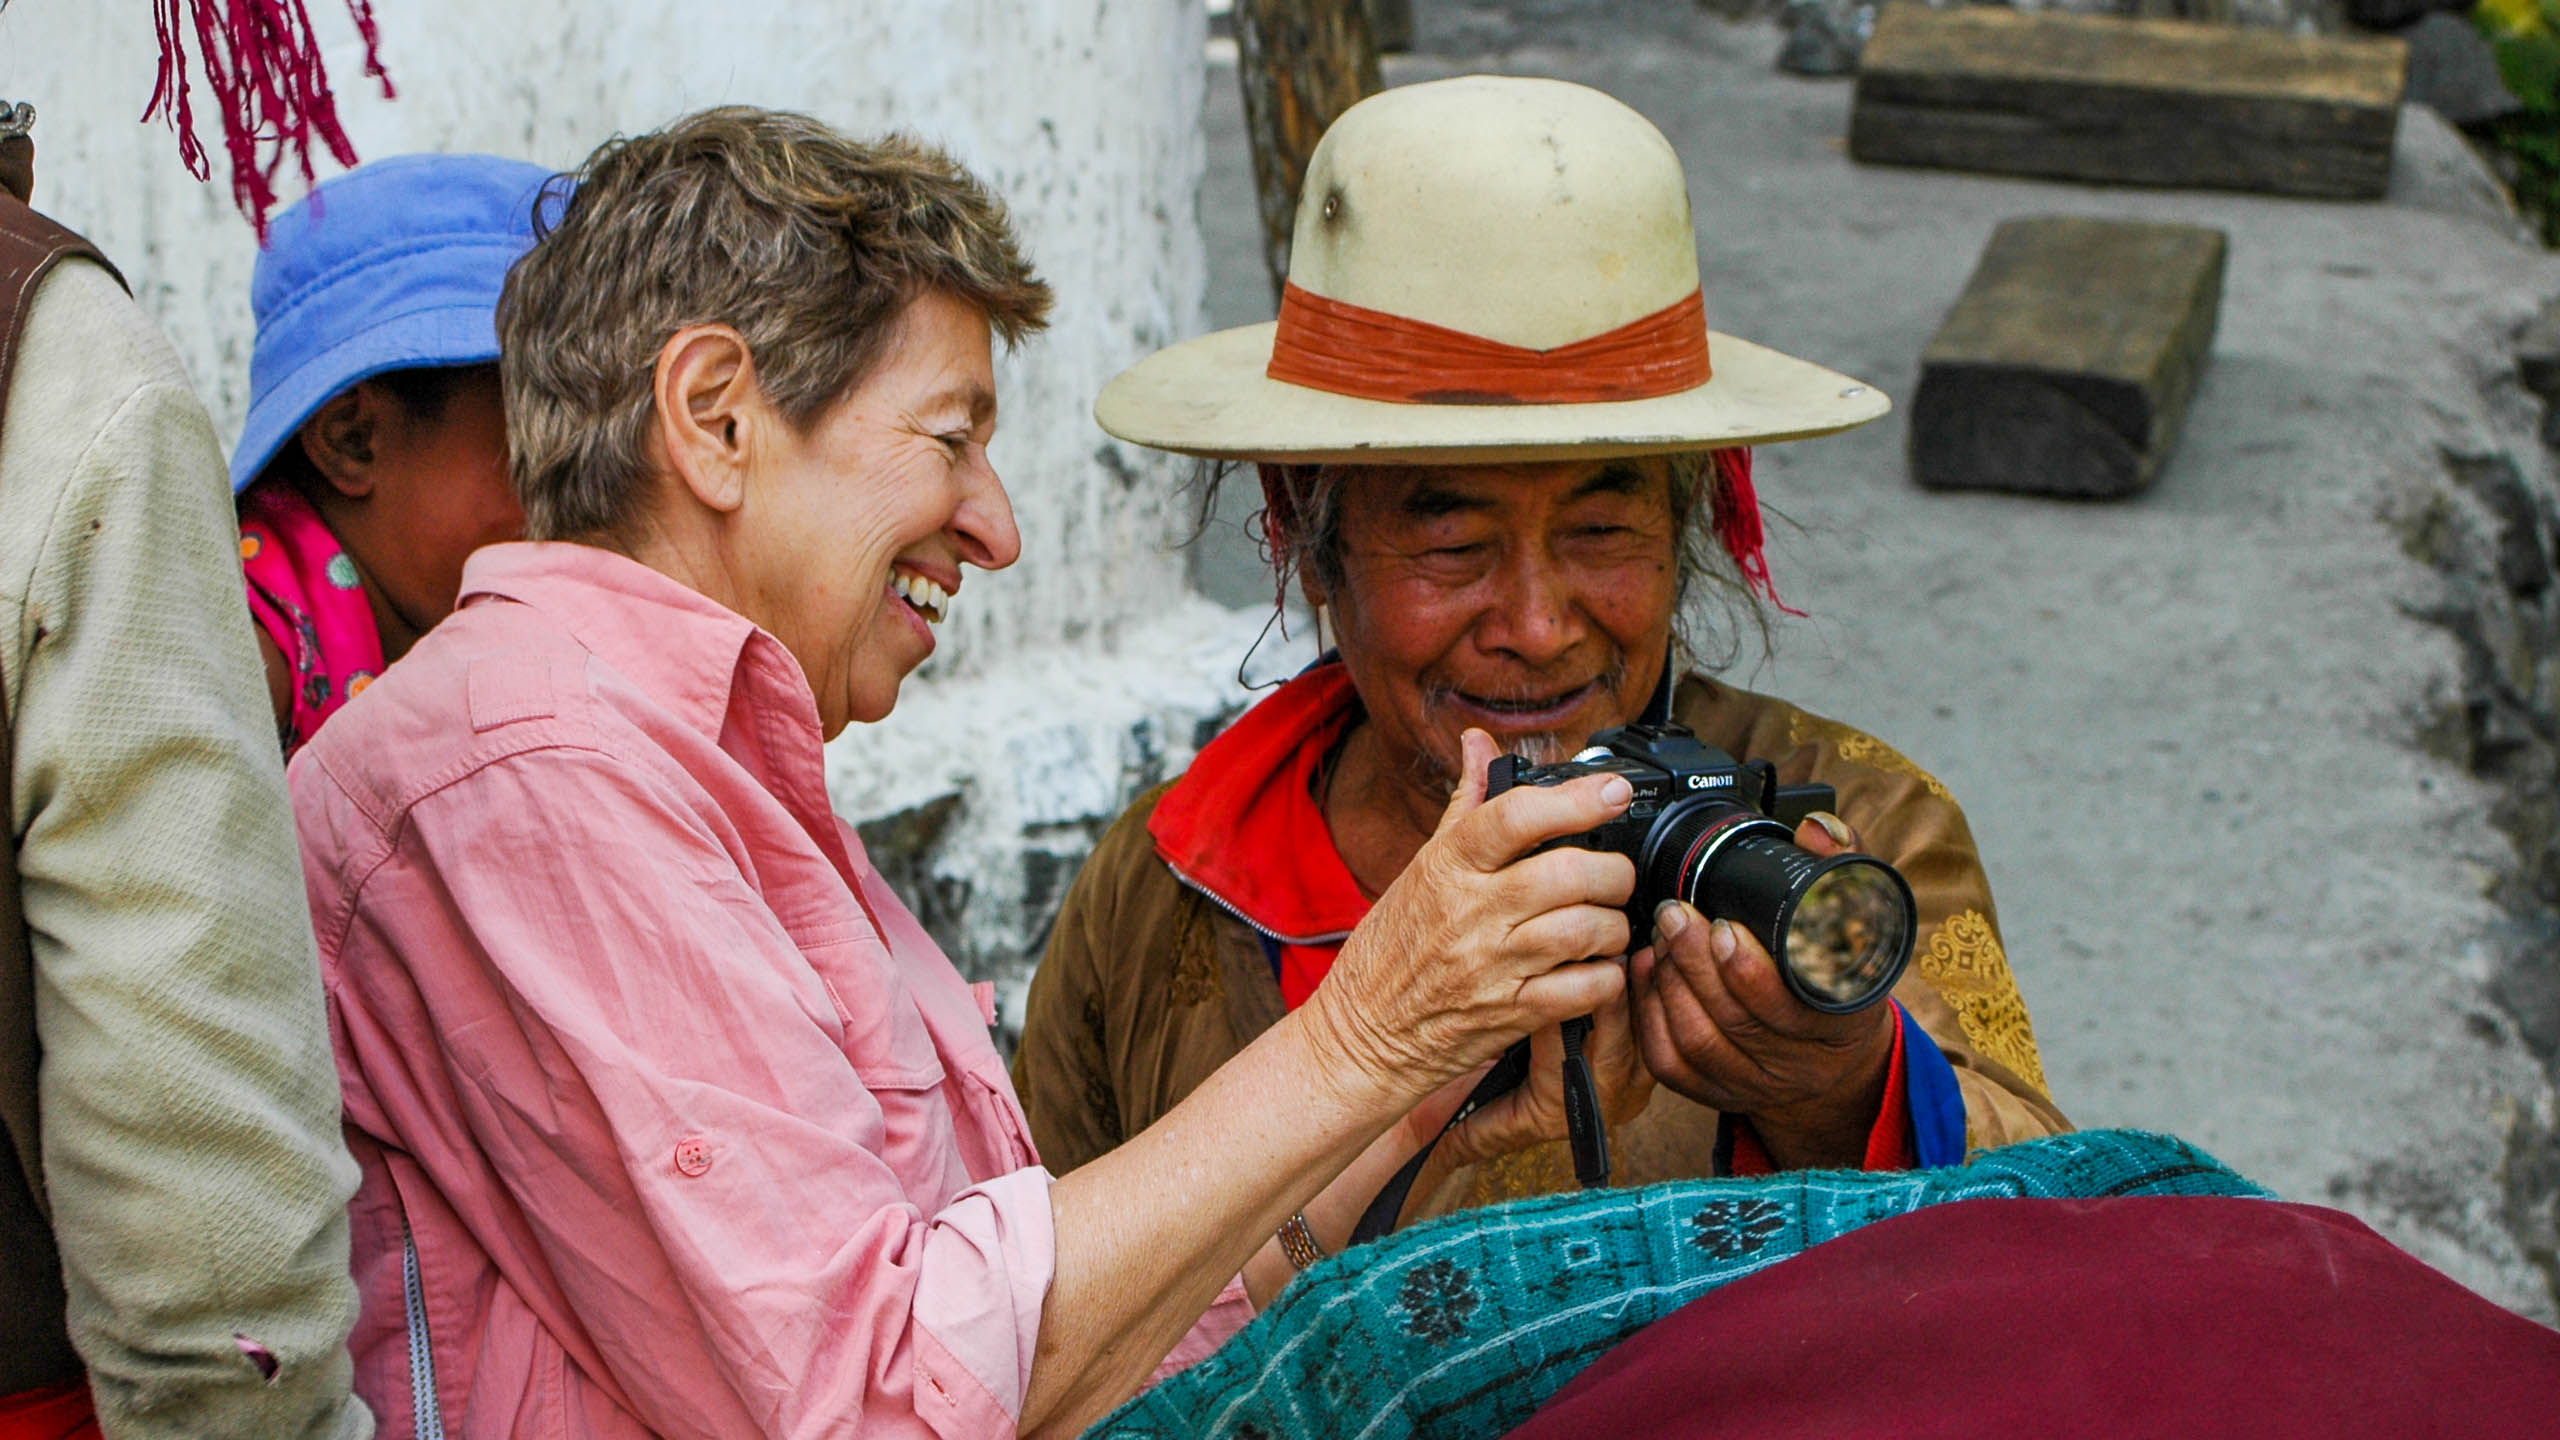 China traveler shares digital camera with local